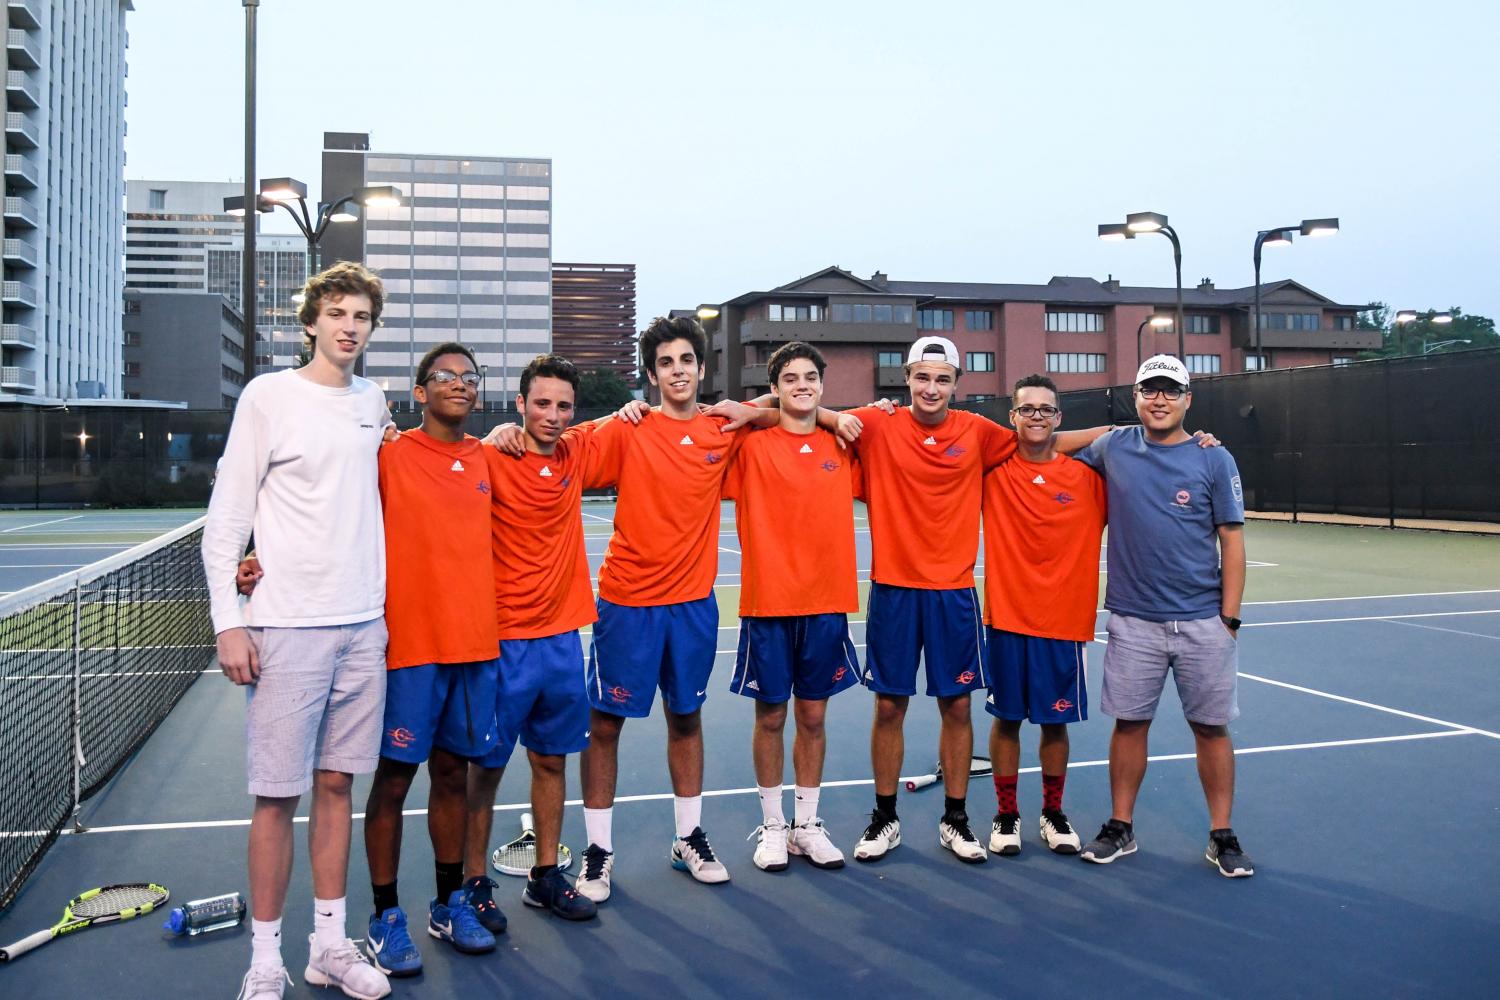 The Globe | CHS Boys Varsity Tennis Team Wins Sectionals Tournament